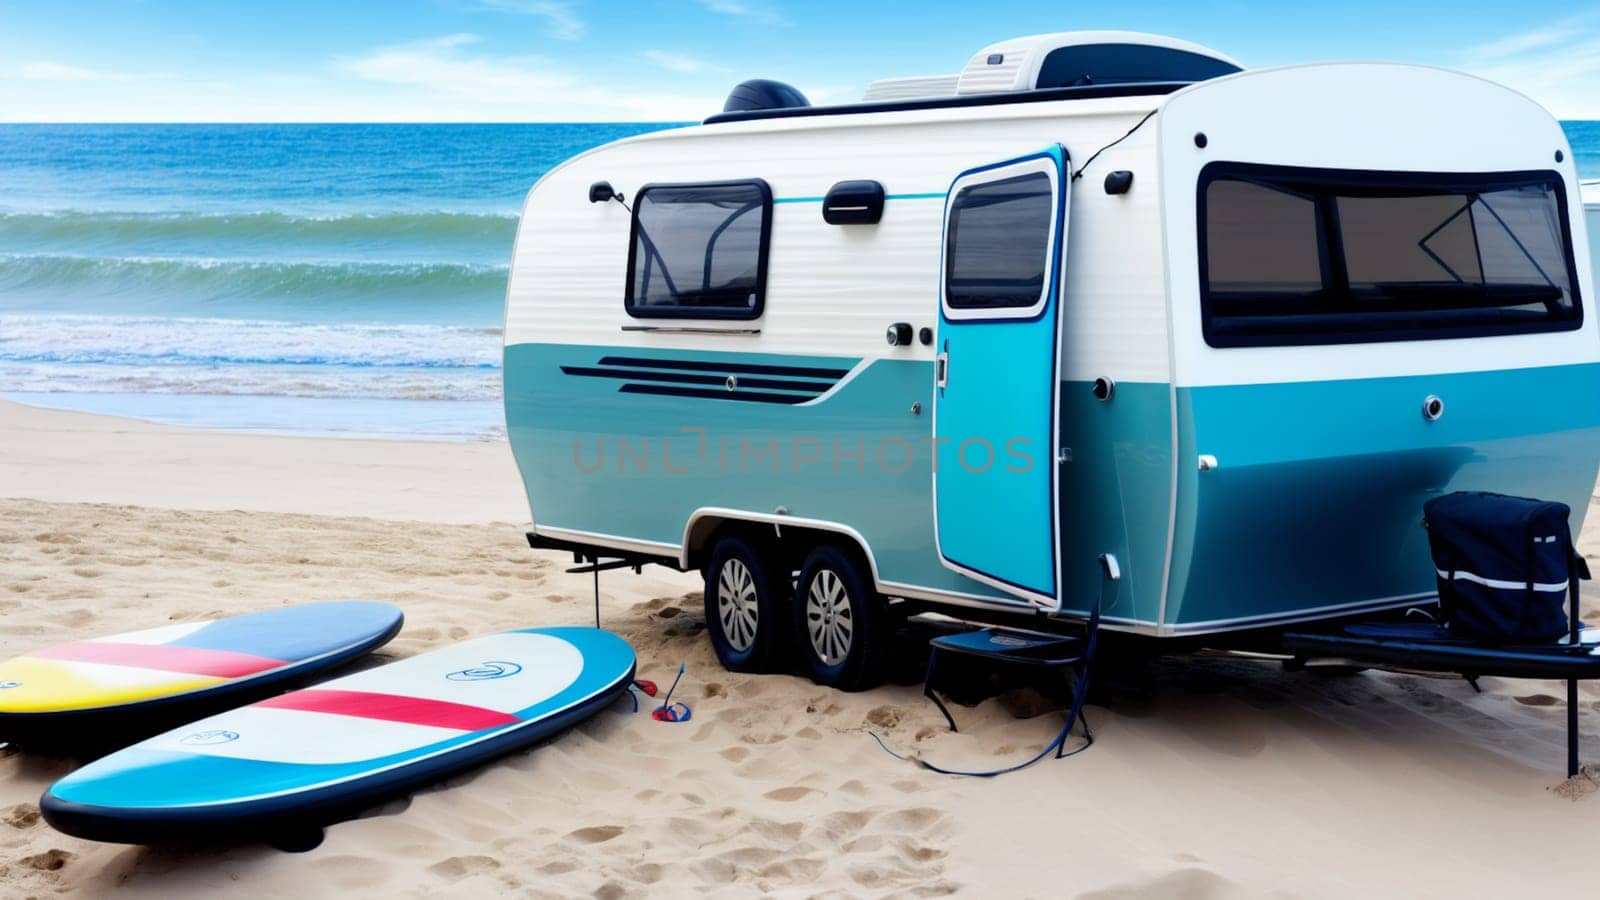 Rulot trailer caravan parked on the beach sand with surfboards. by XabiDonostia